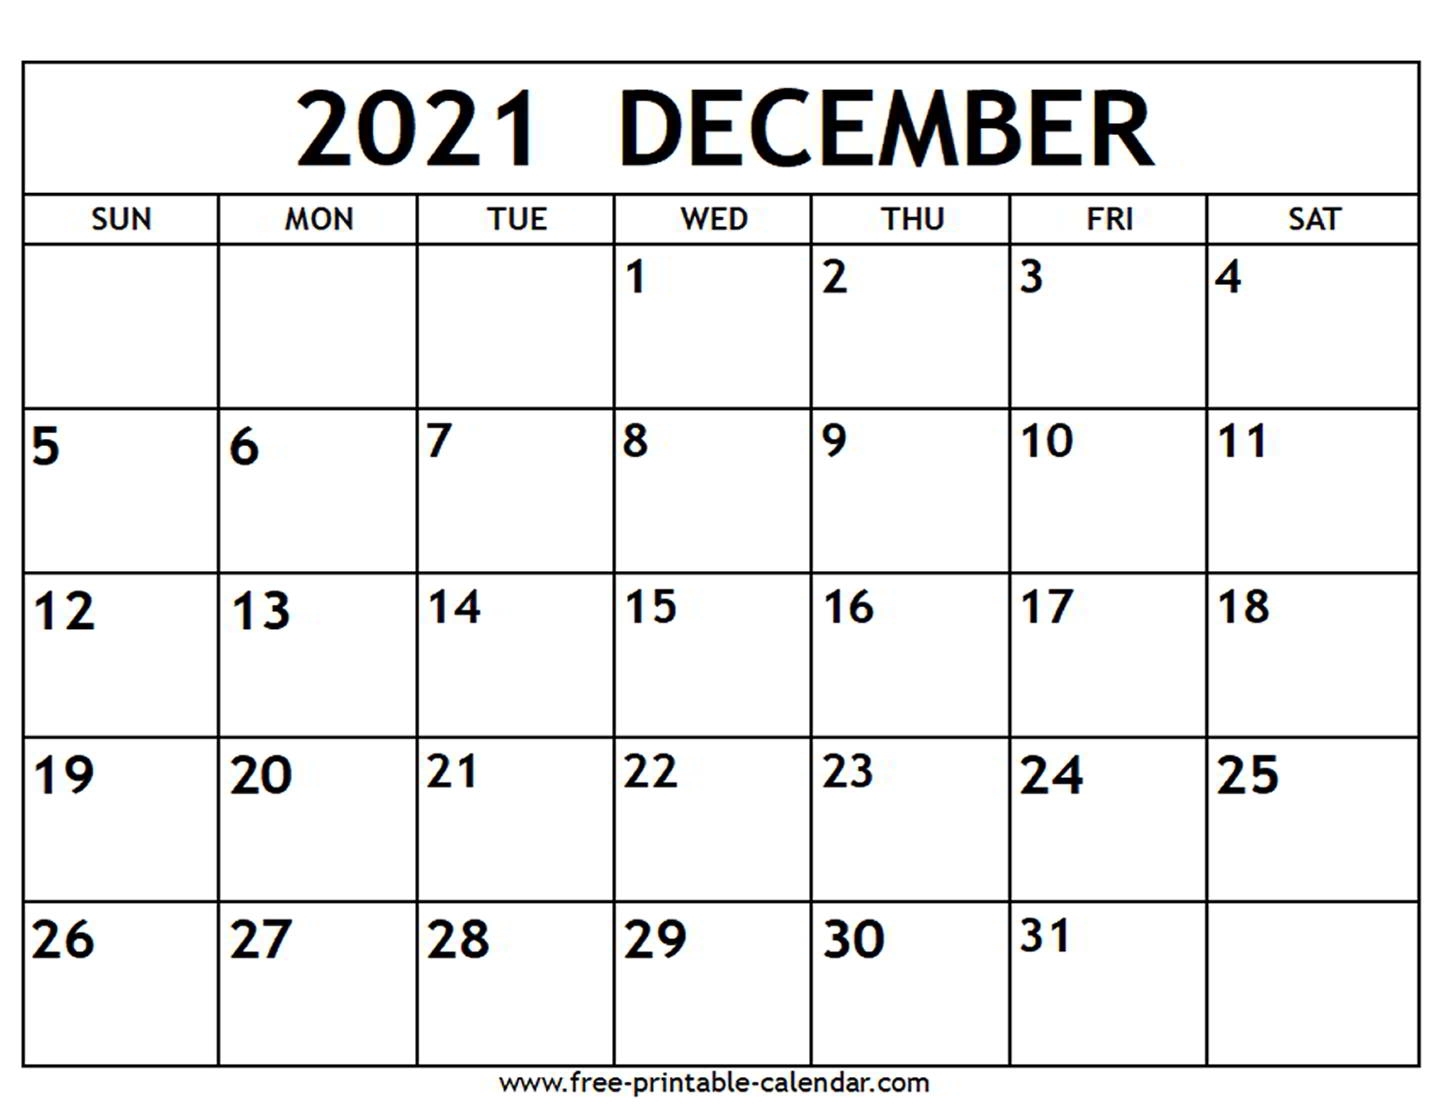 Catch Printable Monthly Calendar December 2021